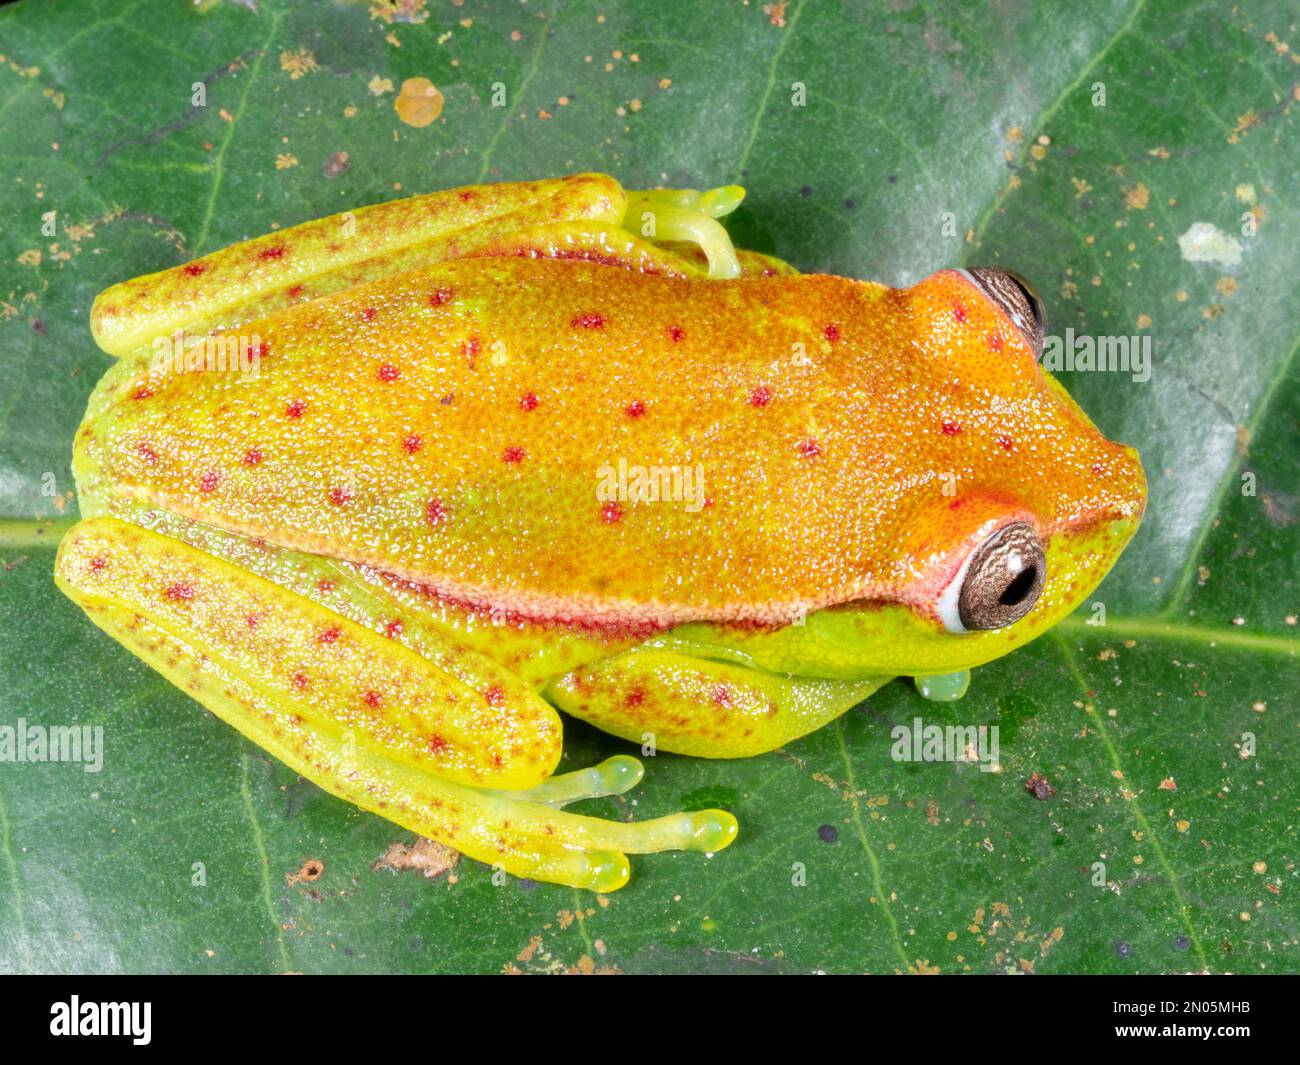 Spotted Treefrog (Boana punctata), Orellana province, Ecuador Stock Photo